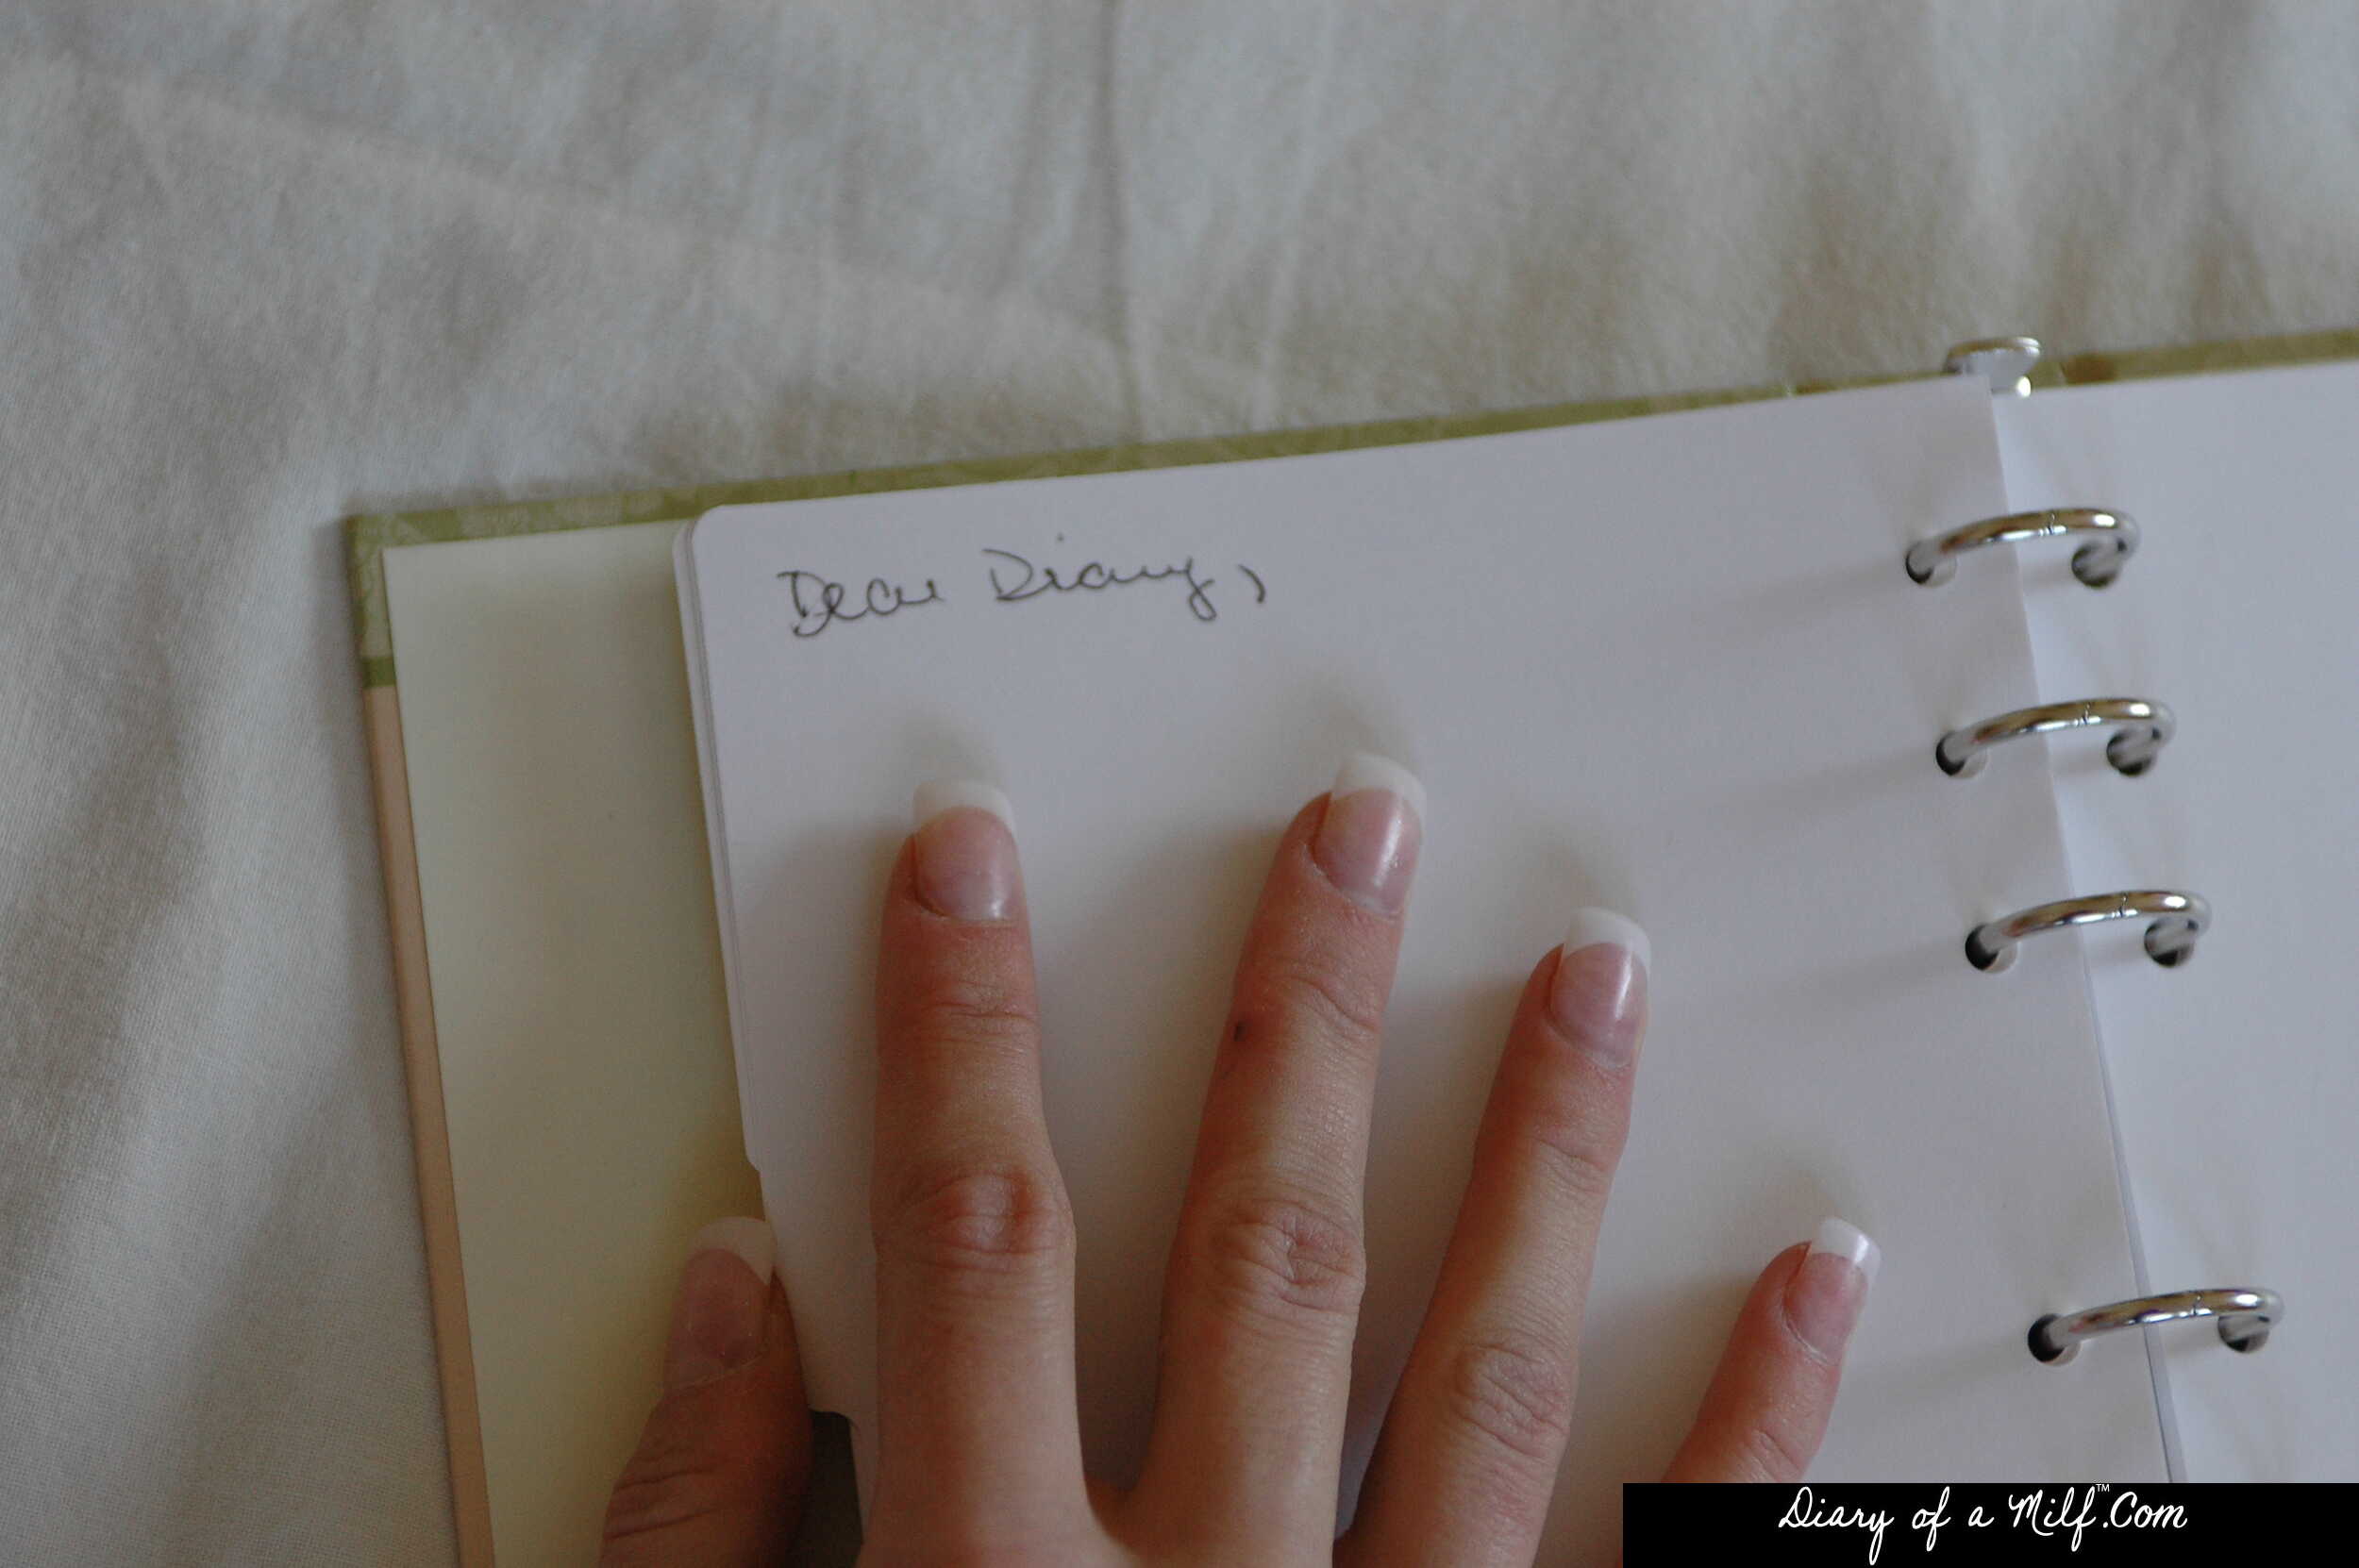 Naughty America 'Diary of a Milf' starring Danielle Derek (Photo 117)